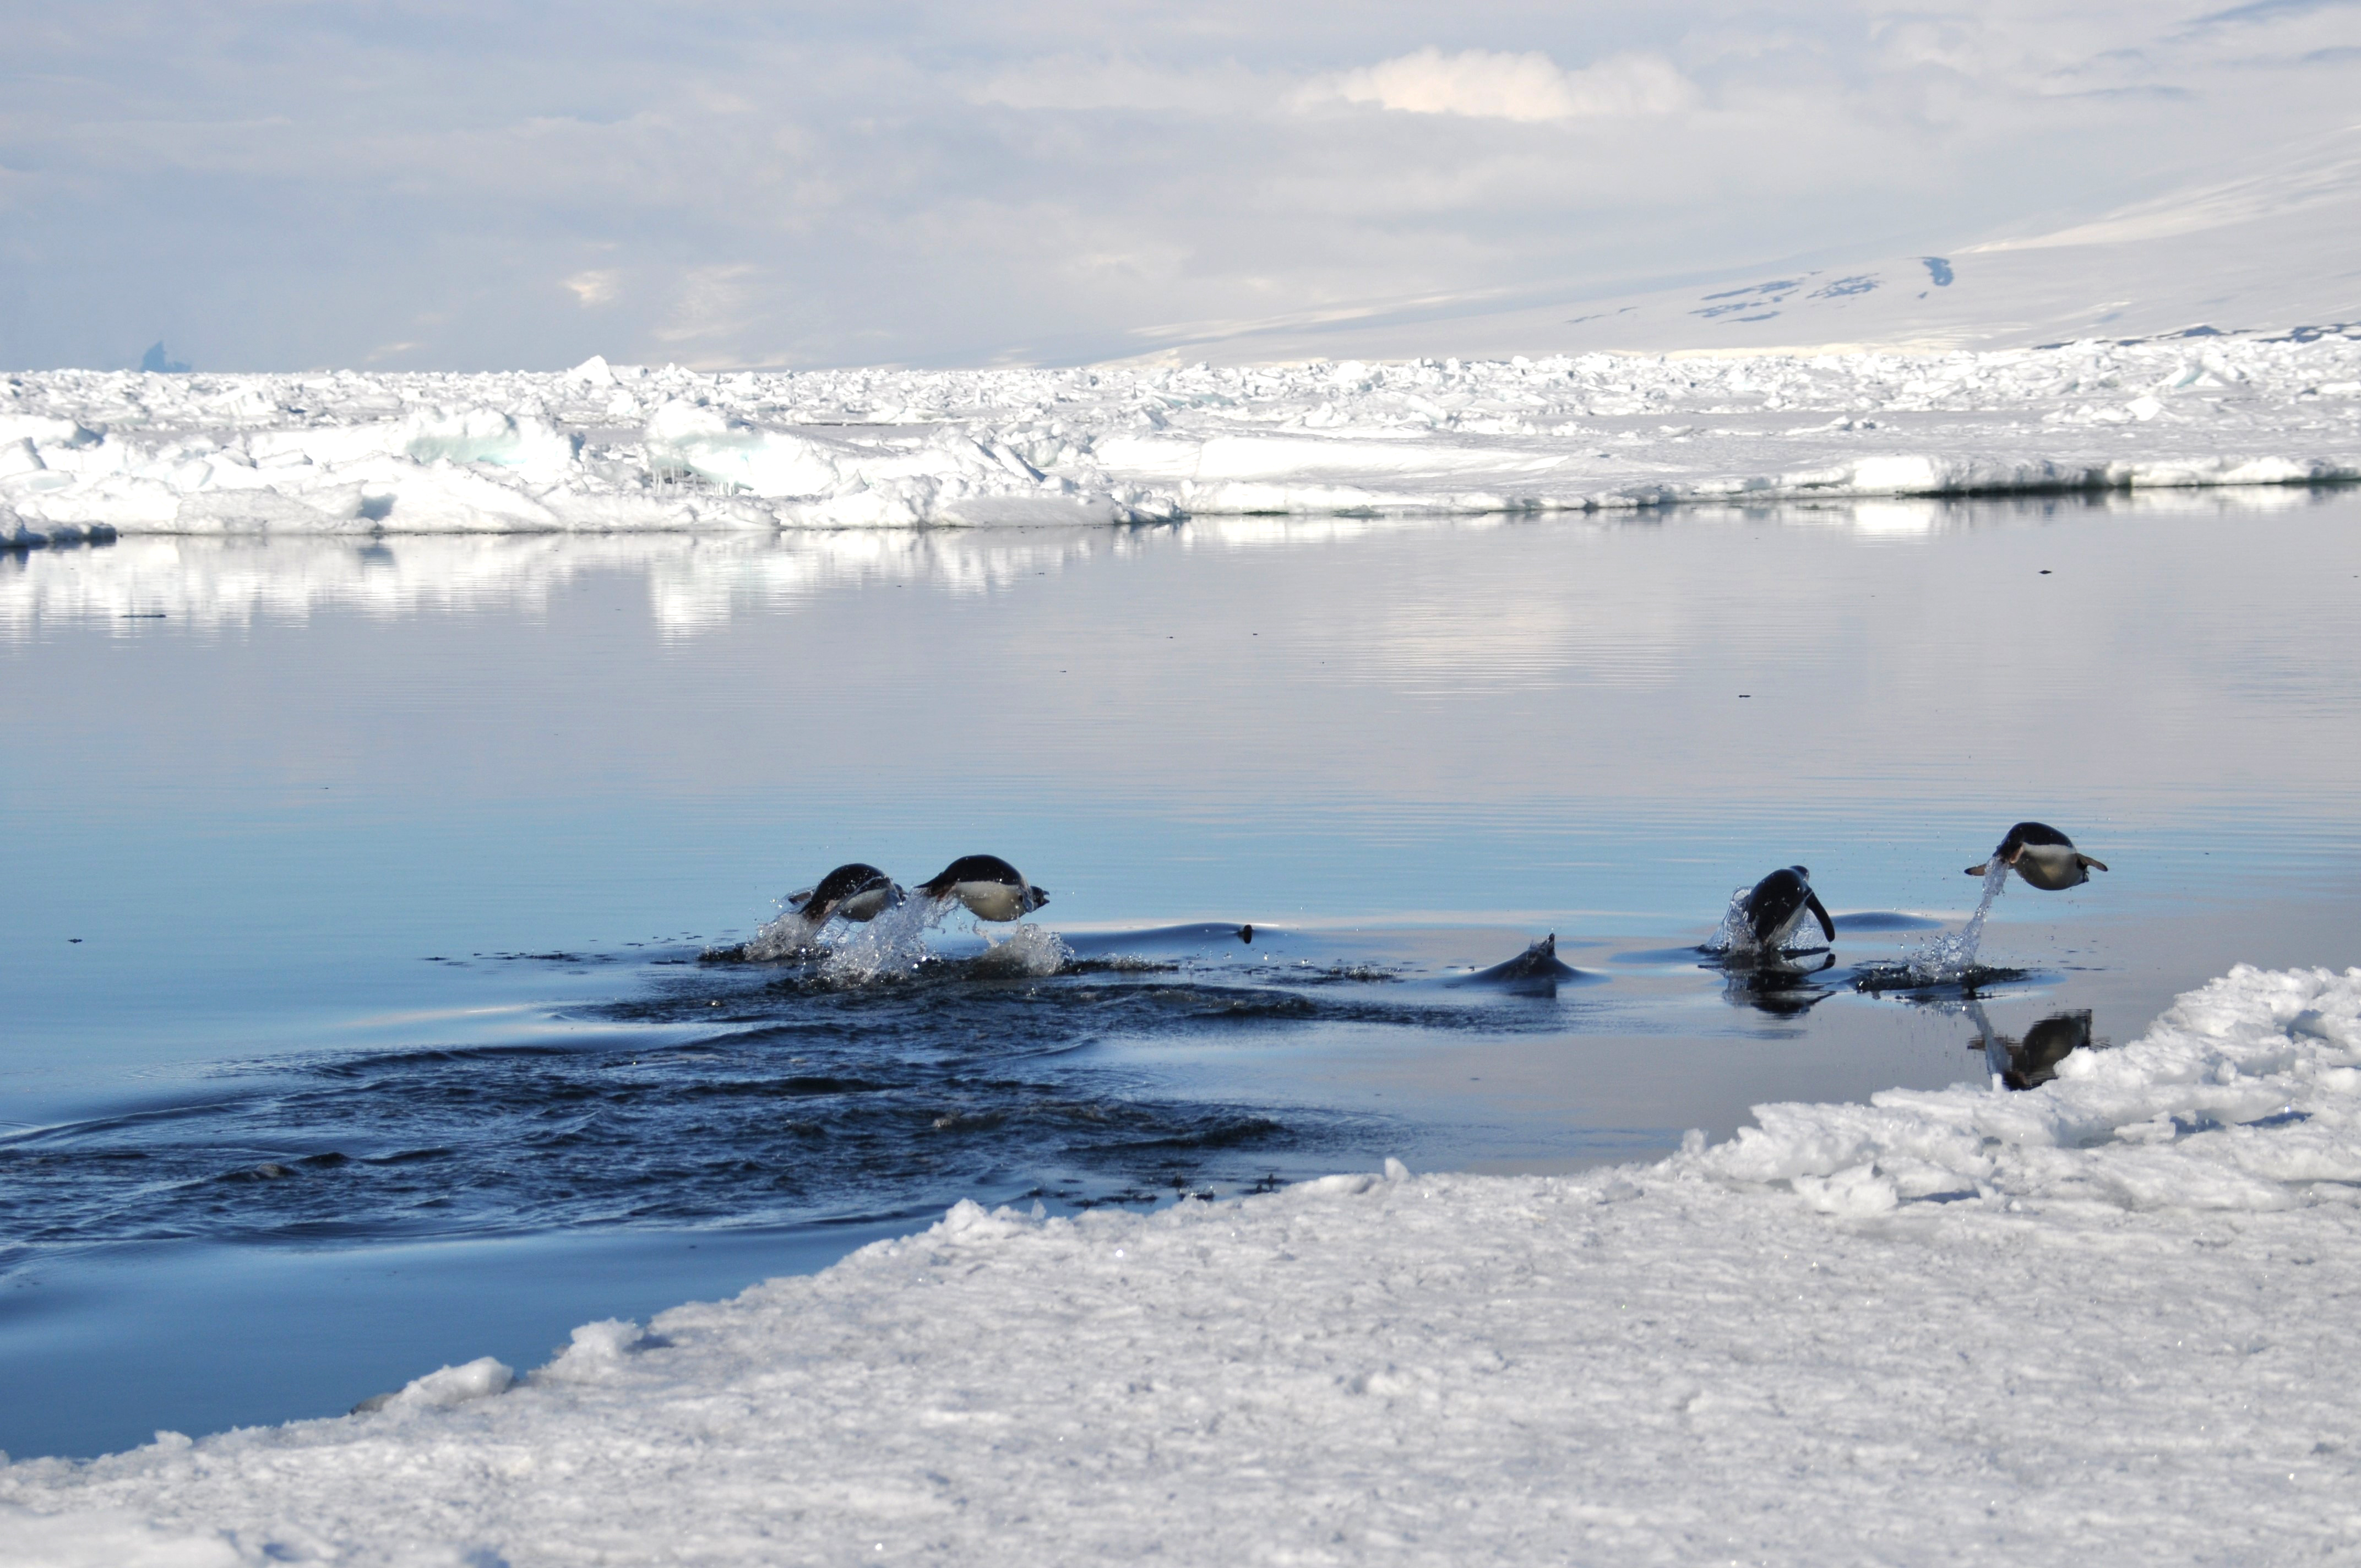 Penguins swimming in the ocean.